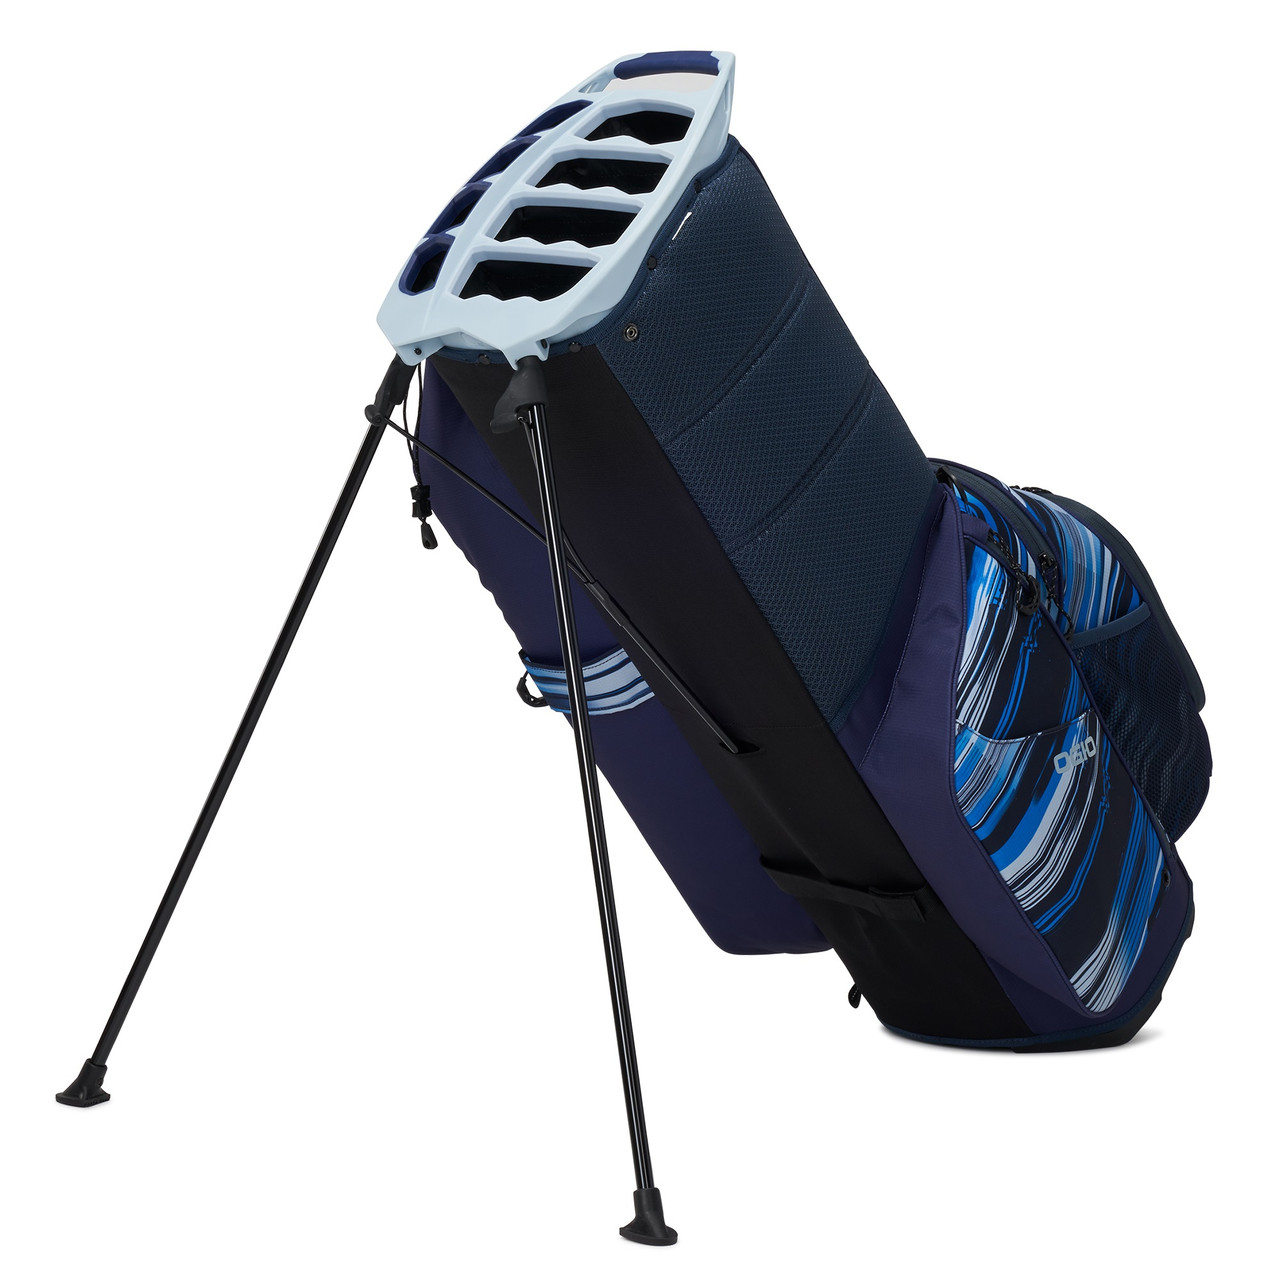 OGIO WOODE 8 Hybrid Golf Bag Review – Golf Gear Box